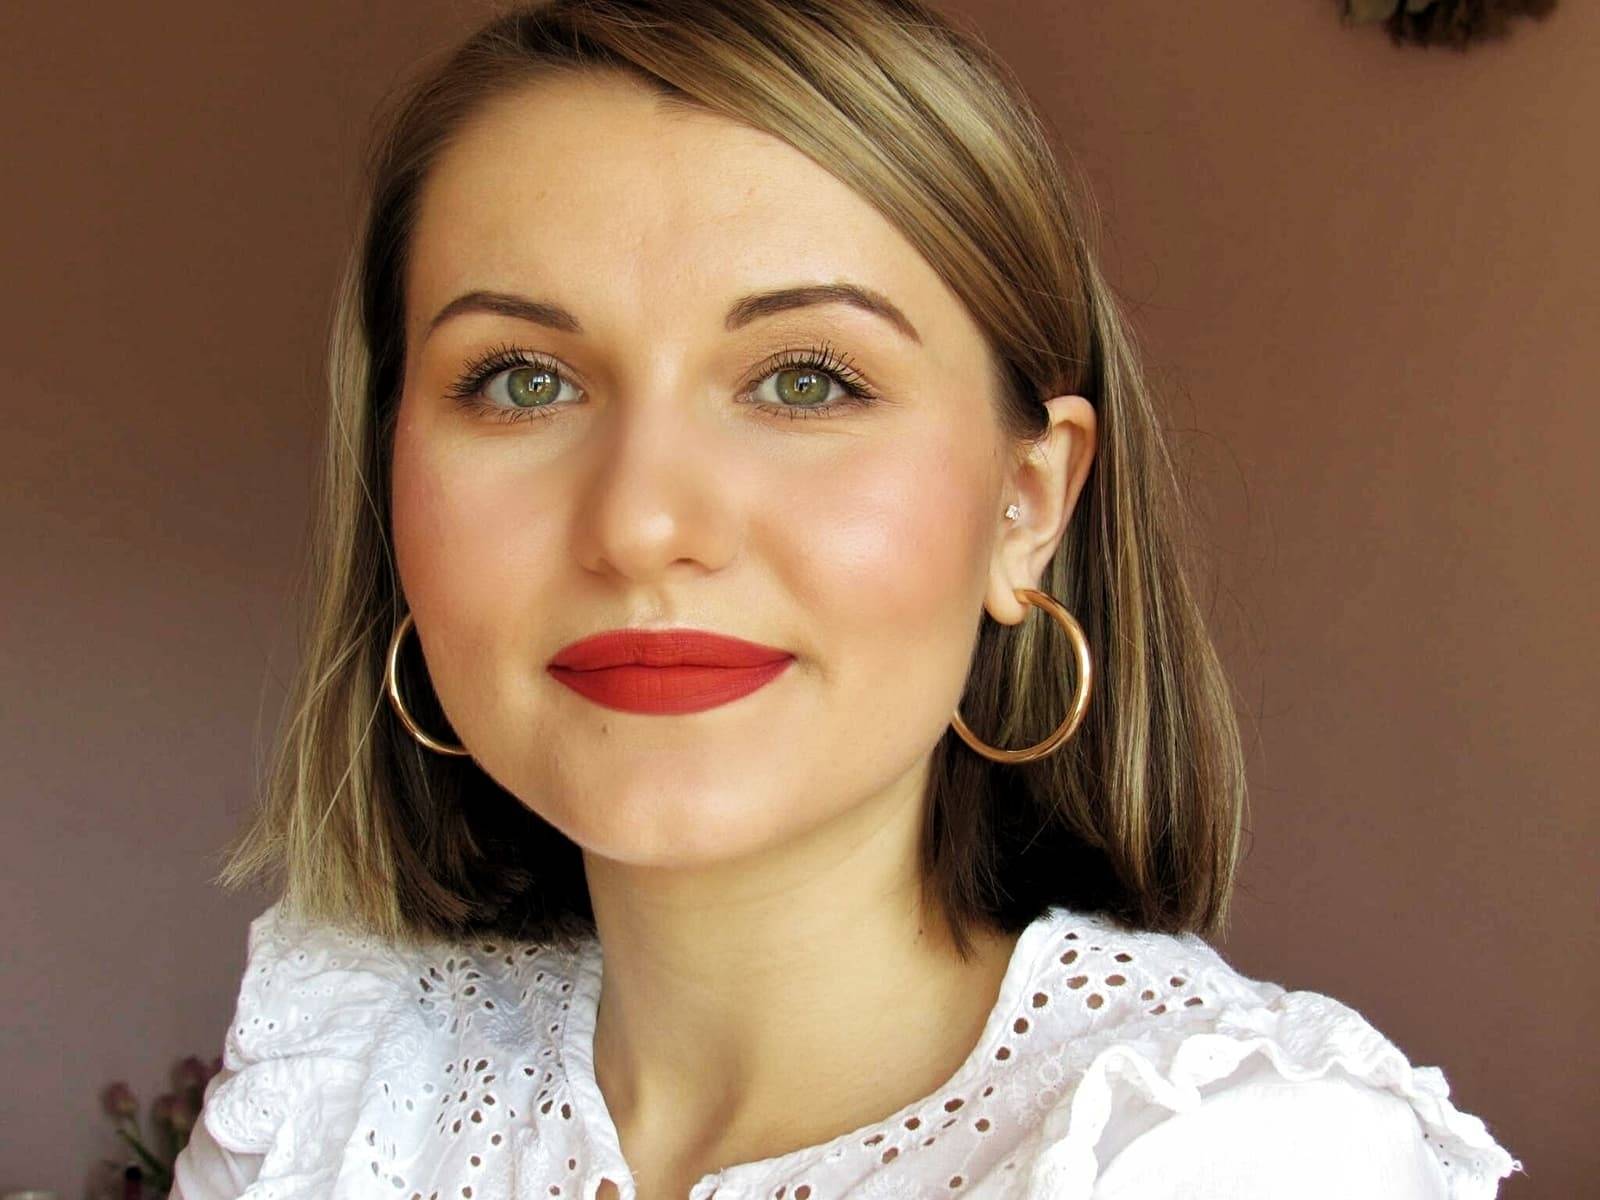 Оксана Матисс, диабет-блогер, 25 лет, стаж СД 1 - 2 года